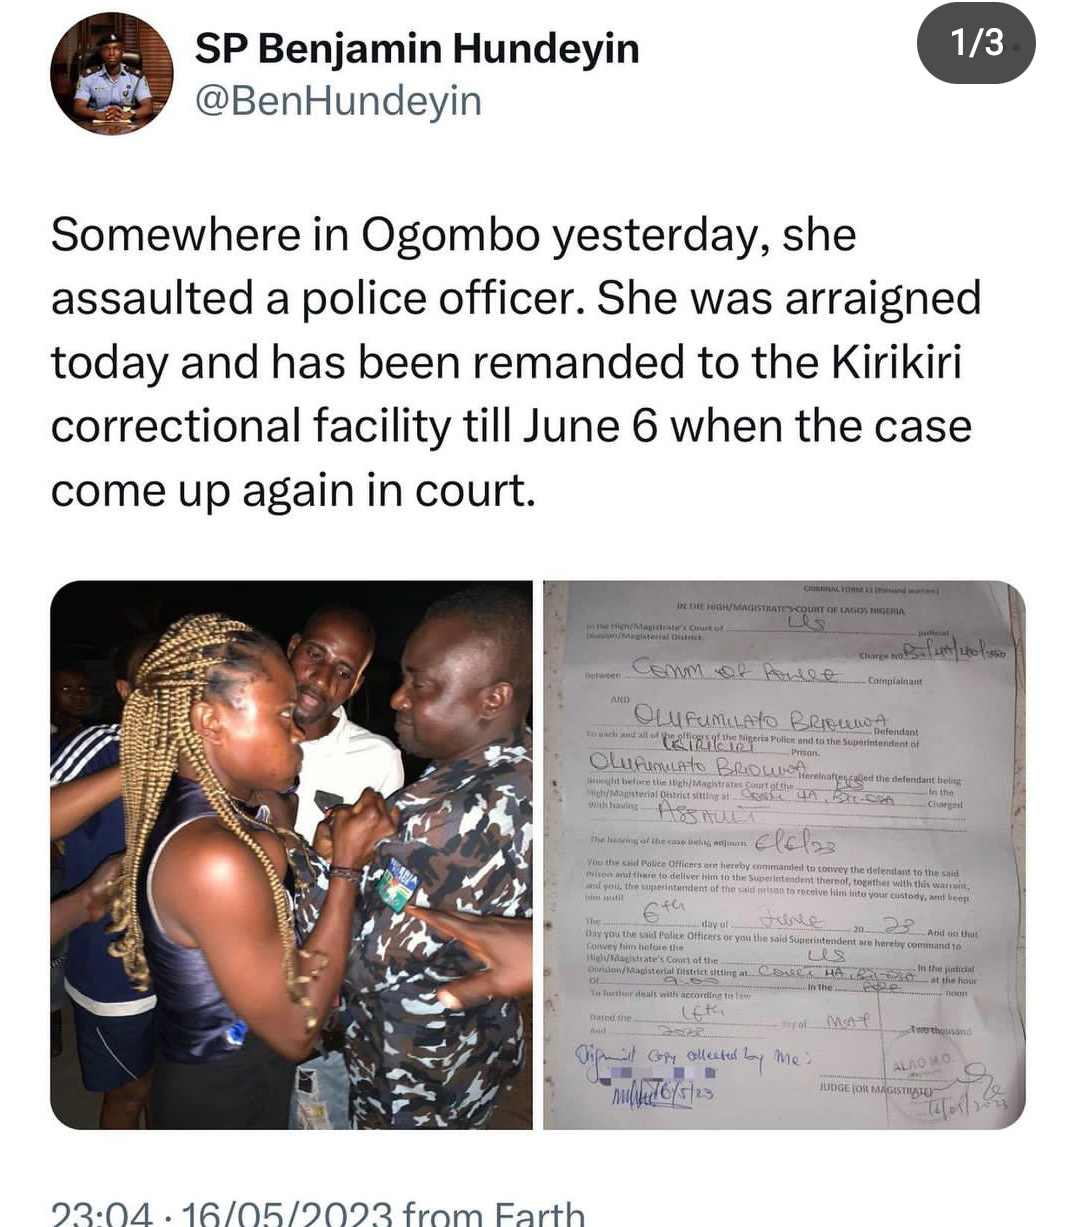 Lady remanded in Kirikiri prison for assaulting police officer